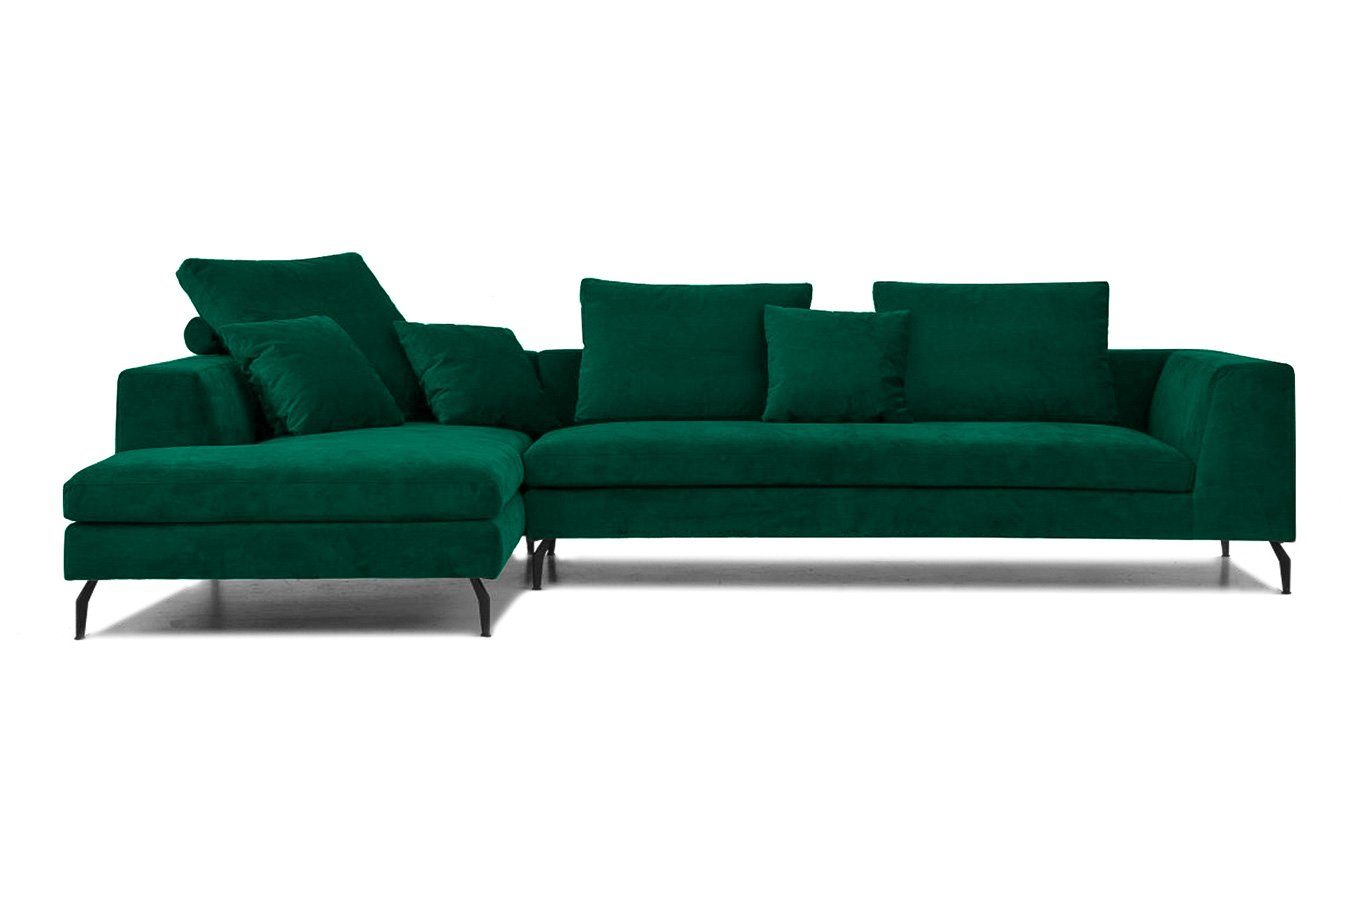 living Stoff Ecksofa daslagerhaus Messina Big-Sofa Kombination dunkelgrün